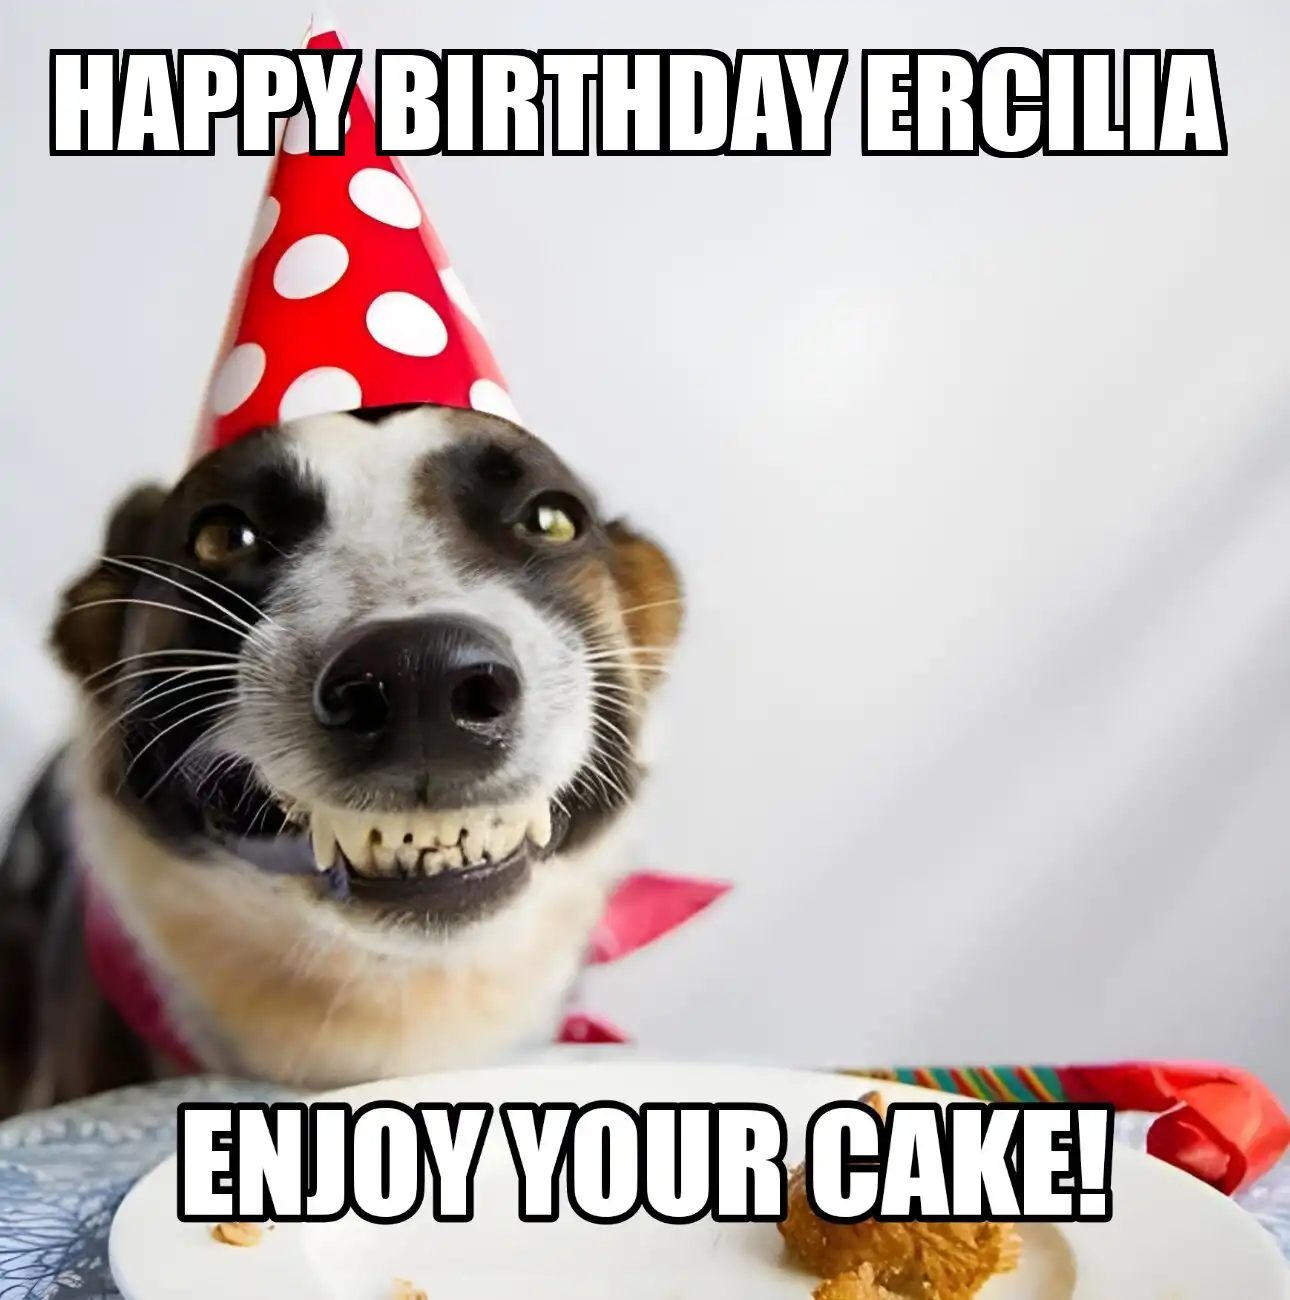 Happy Birthday Ercilia Enjoy Your Cake Dog Meme